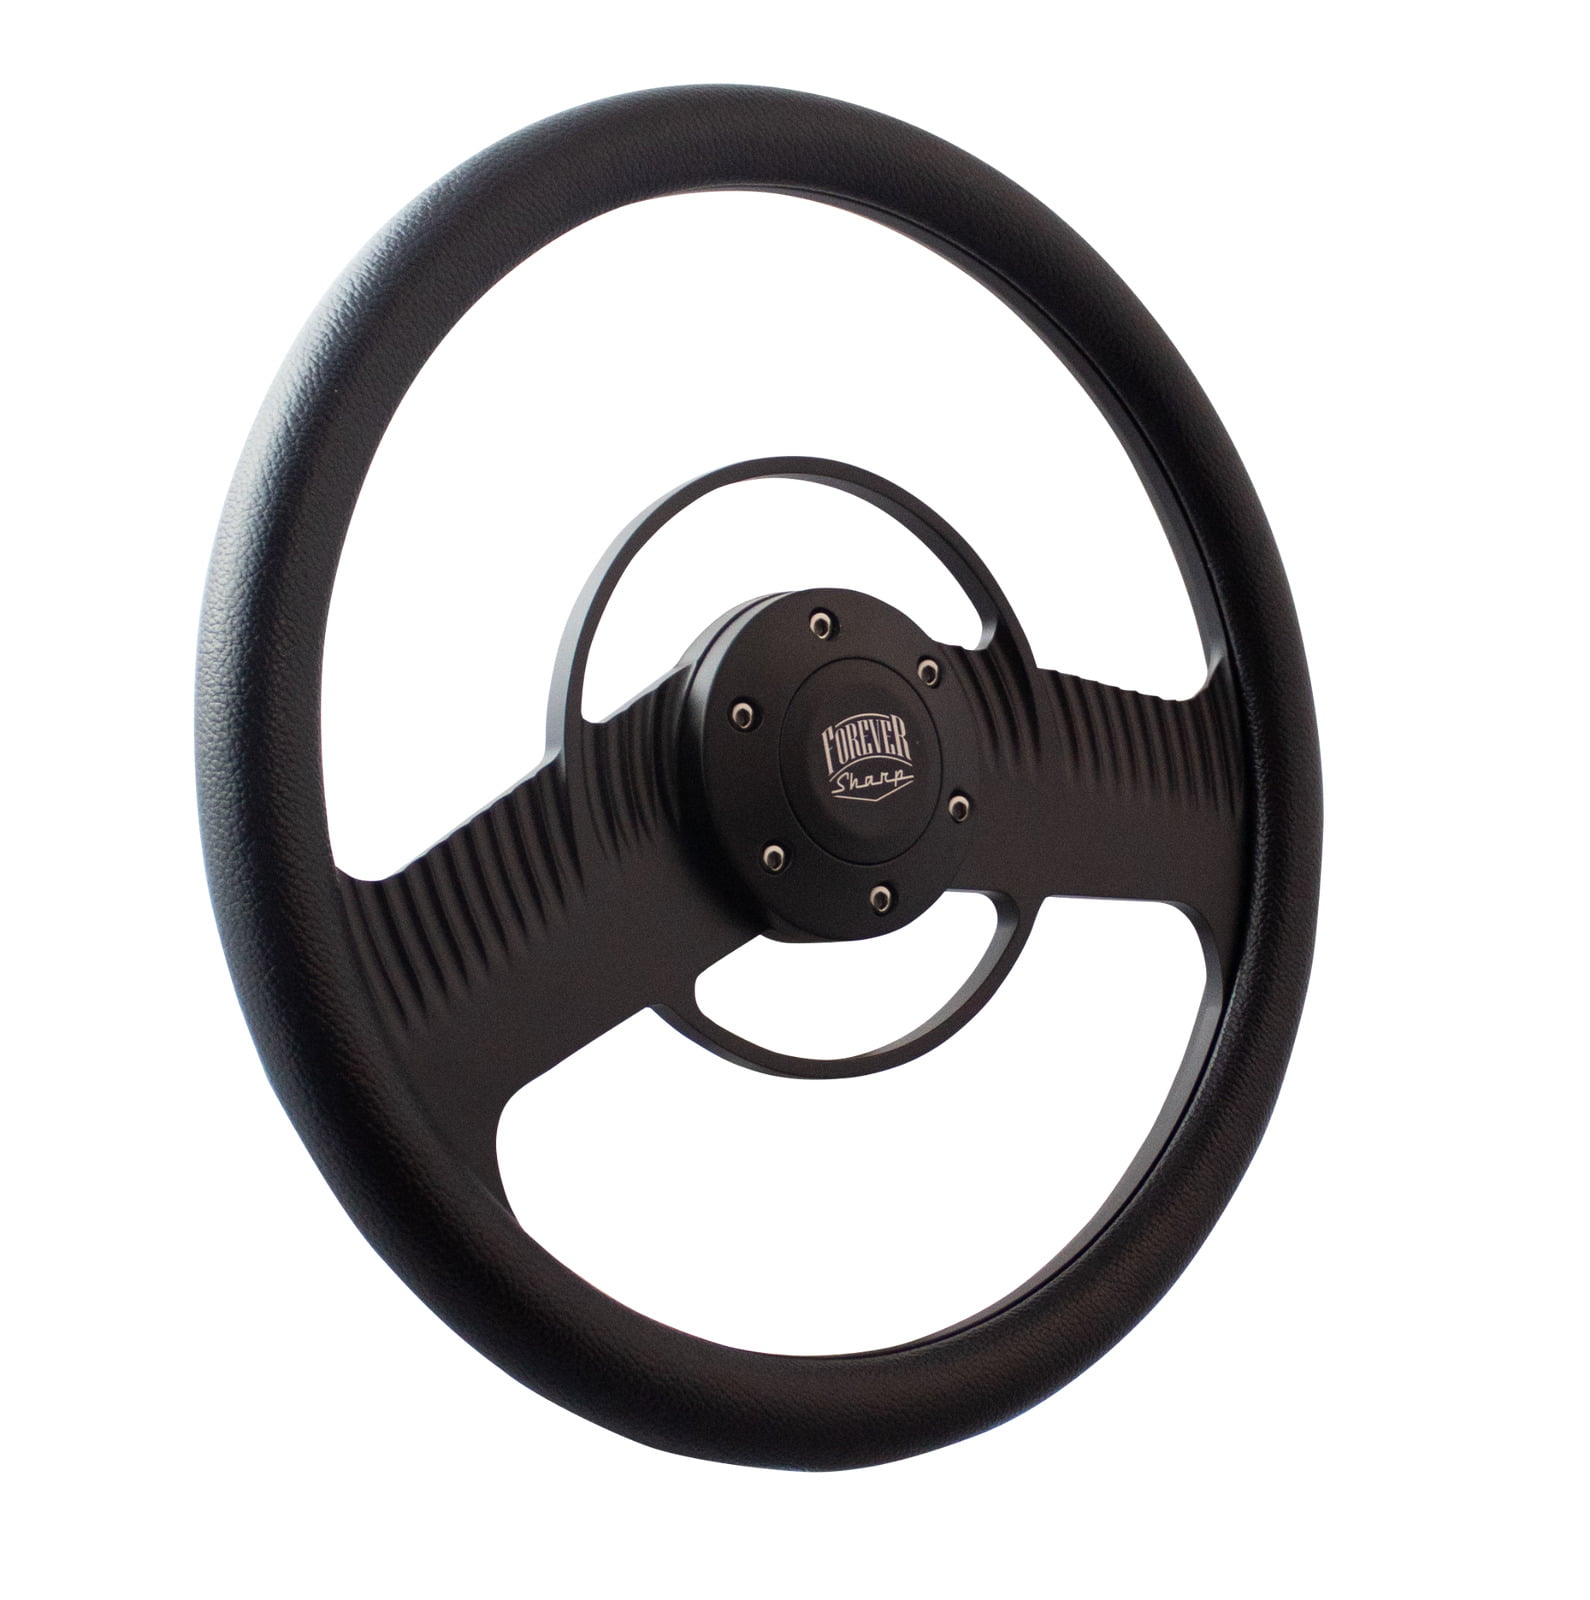 5 & 6 Hole Matte Black Hub Adapter Installation Kit B03 for Aftermarket Steering Wheels 